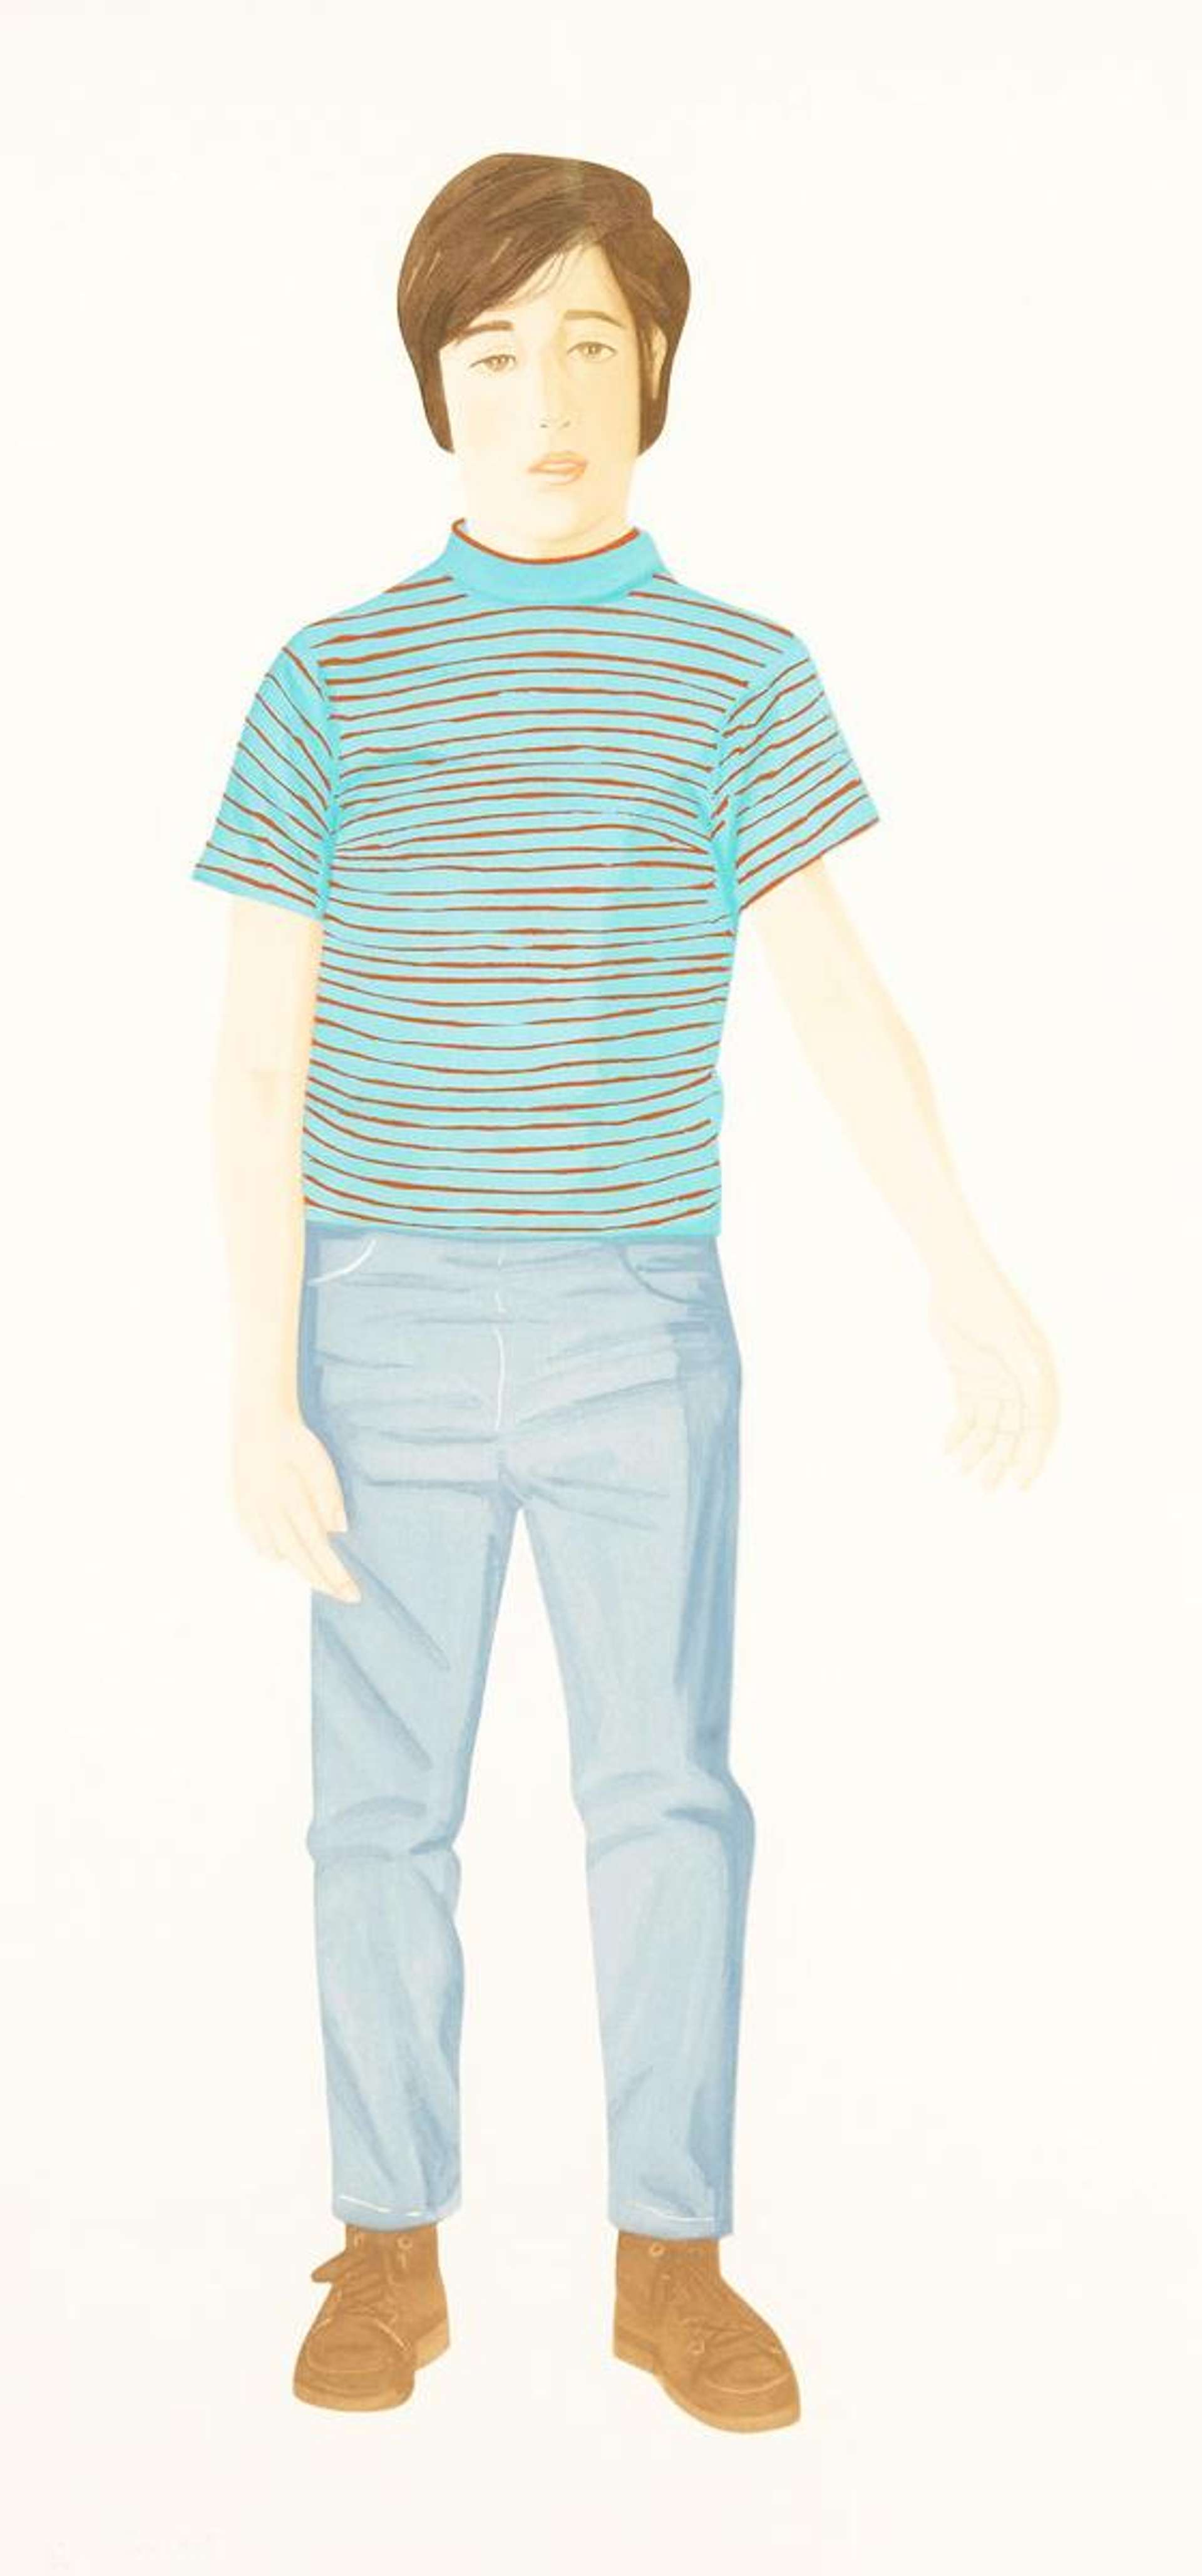 The Striped Shirt - Signed Print by Alex Katz 1980 - MyArtBroker